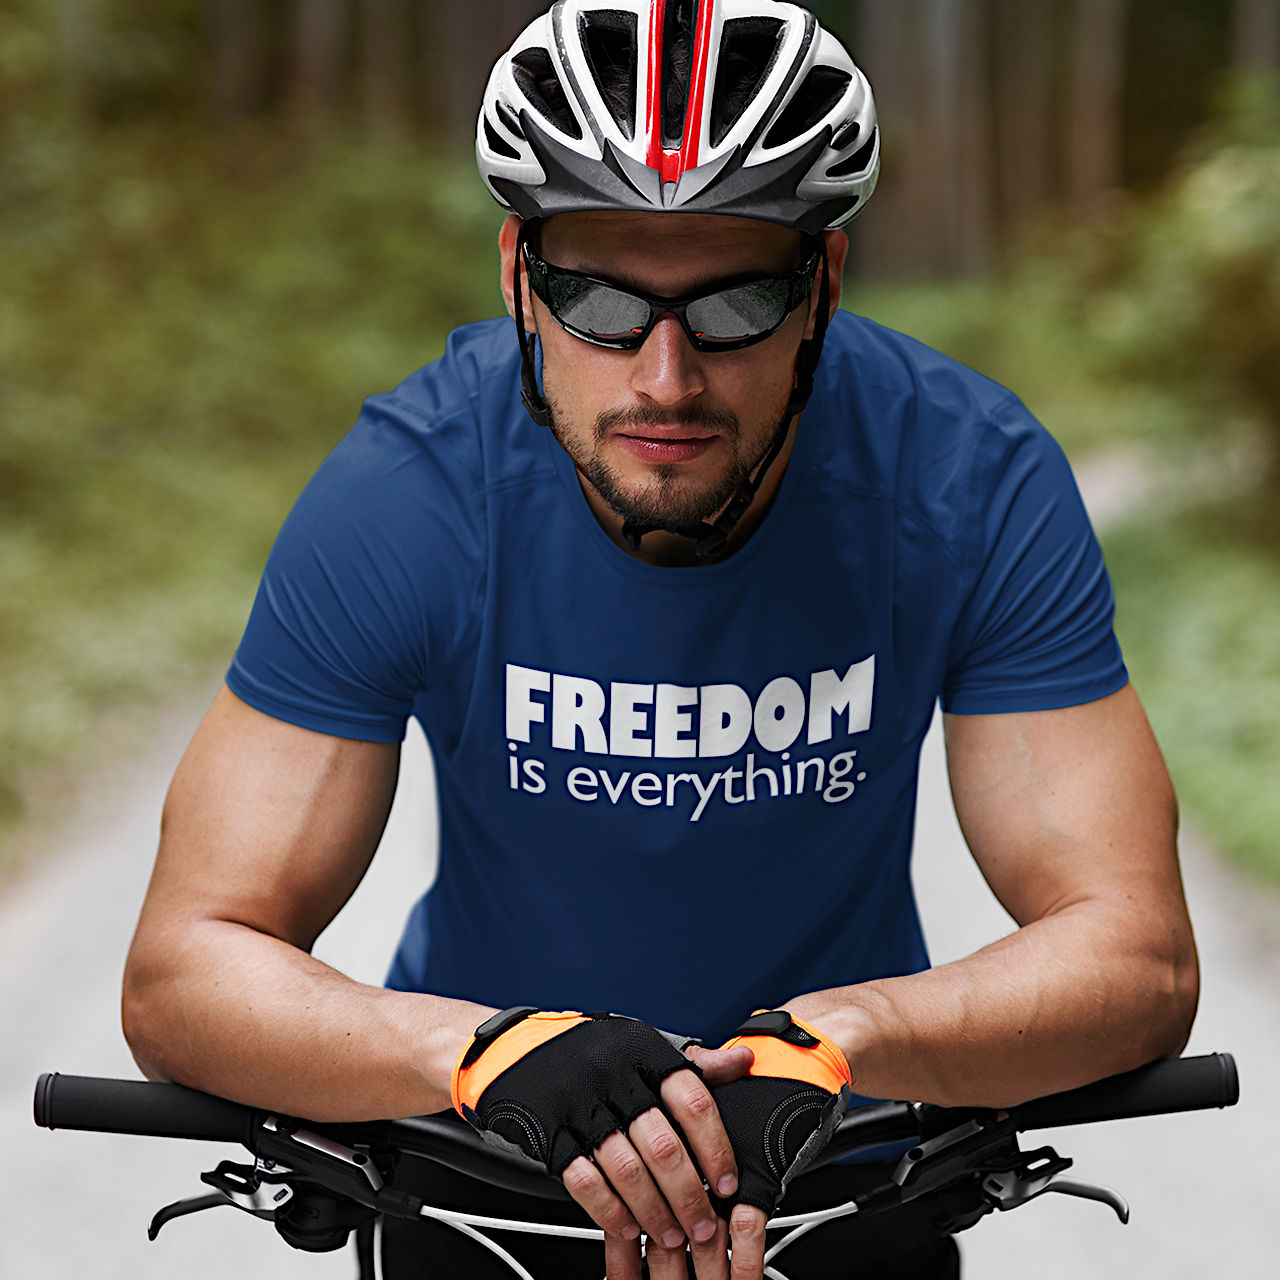 image_freedom_everything_cyclist_man_blue_white_man_38258-r-el2_x1200